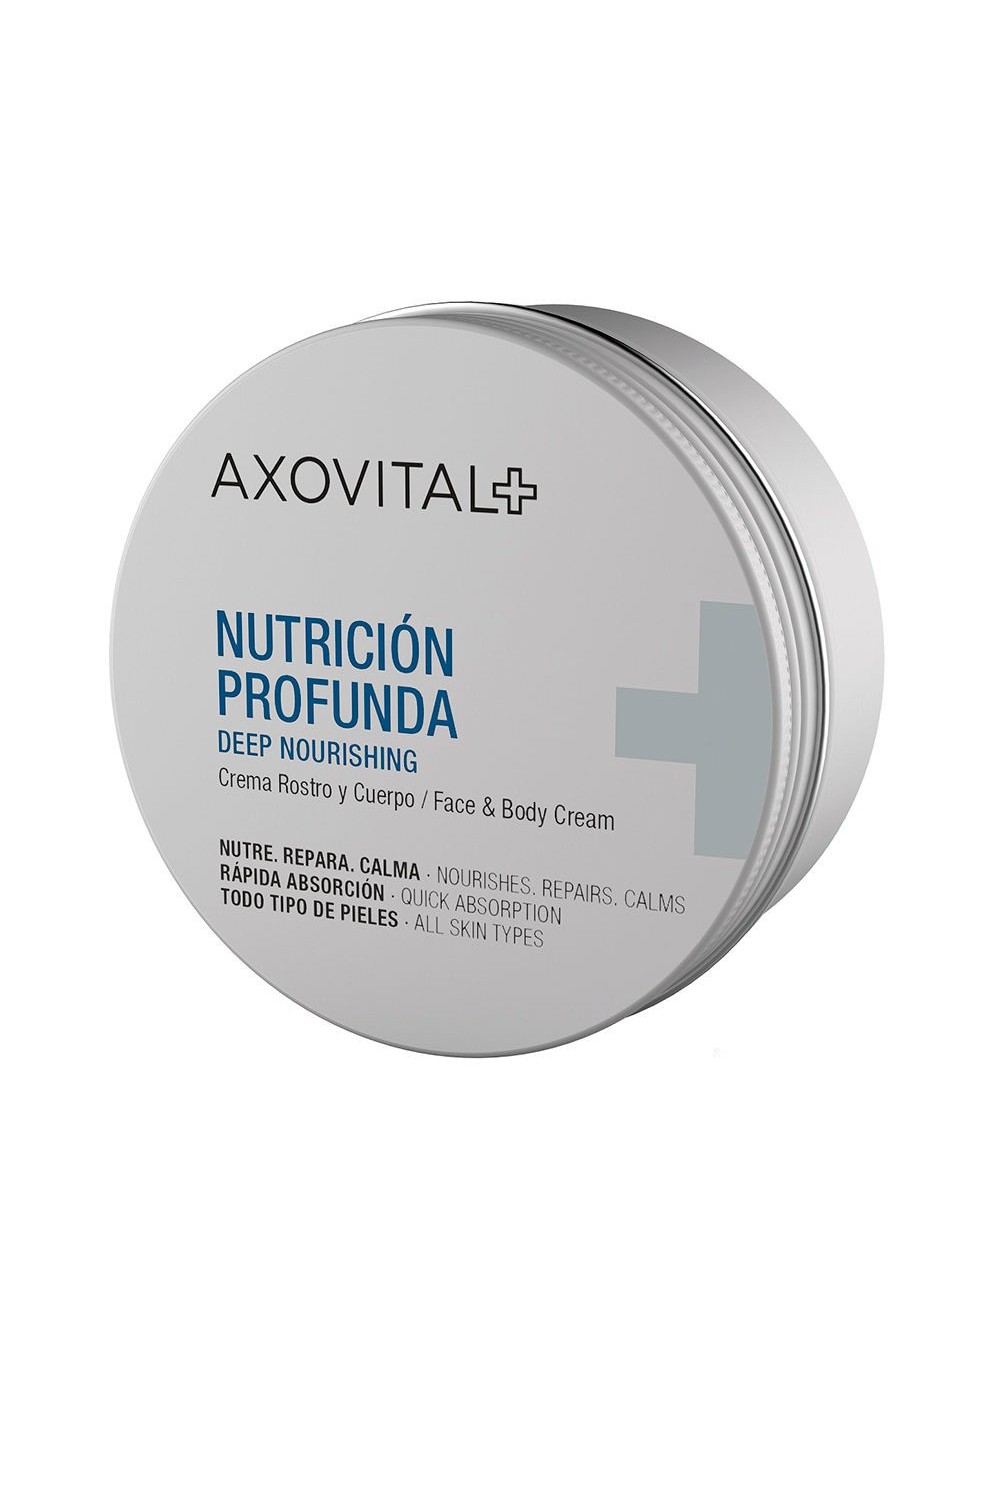 Axovital Avoxital Nutrition Cream Prof Face y Body 250ml